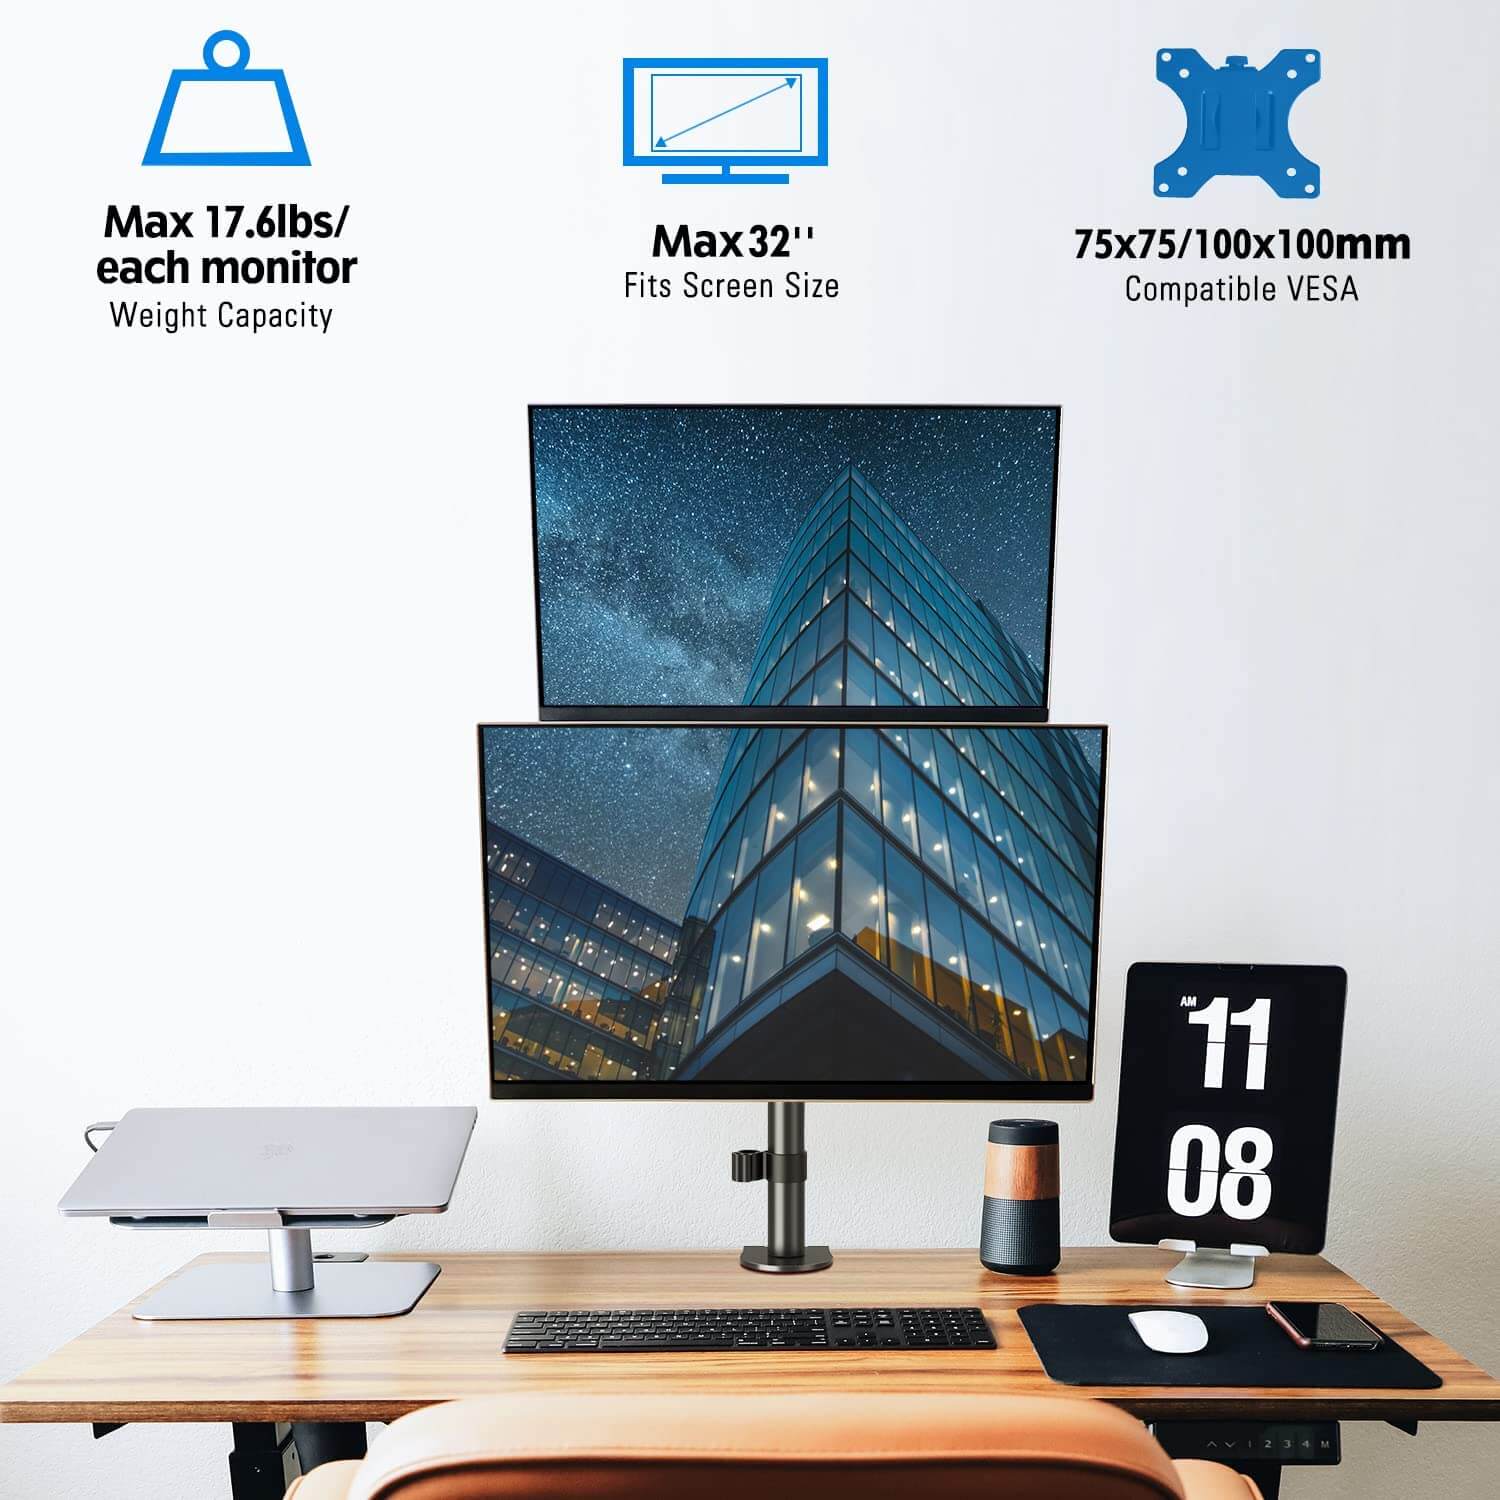 Vertical Dual Monitor Desk Mount for Max 32'' Monitors MUA3004